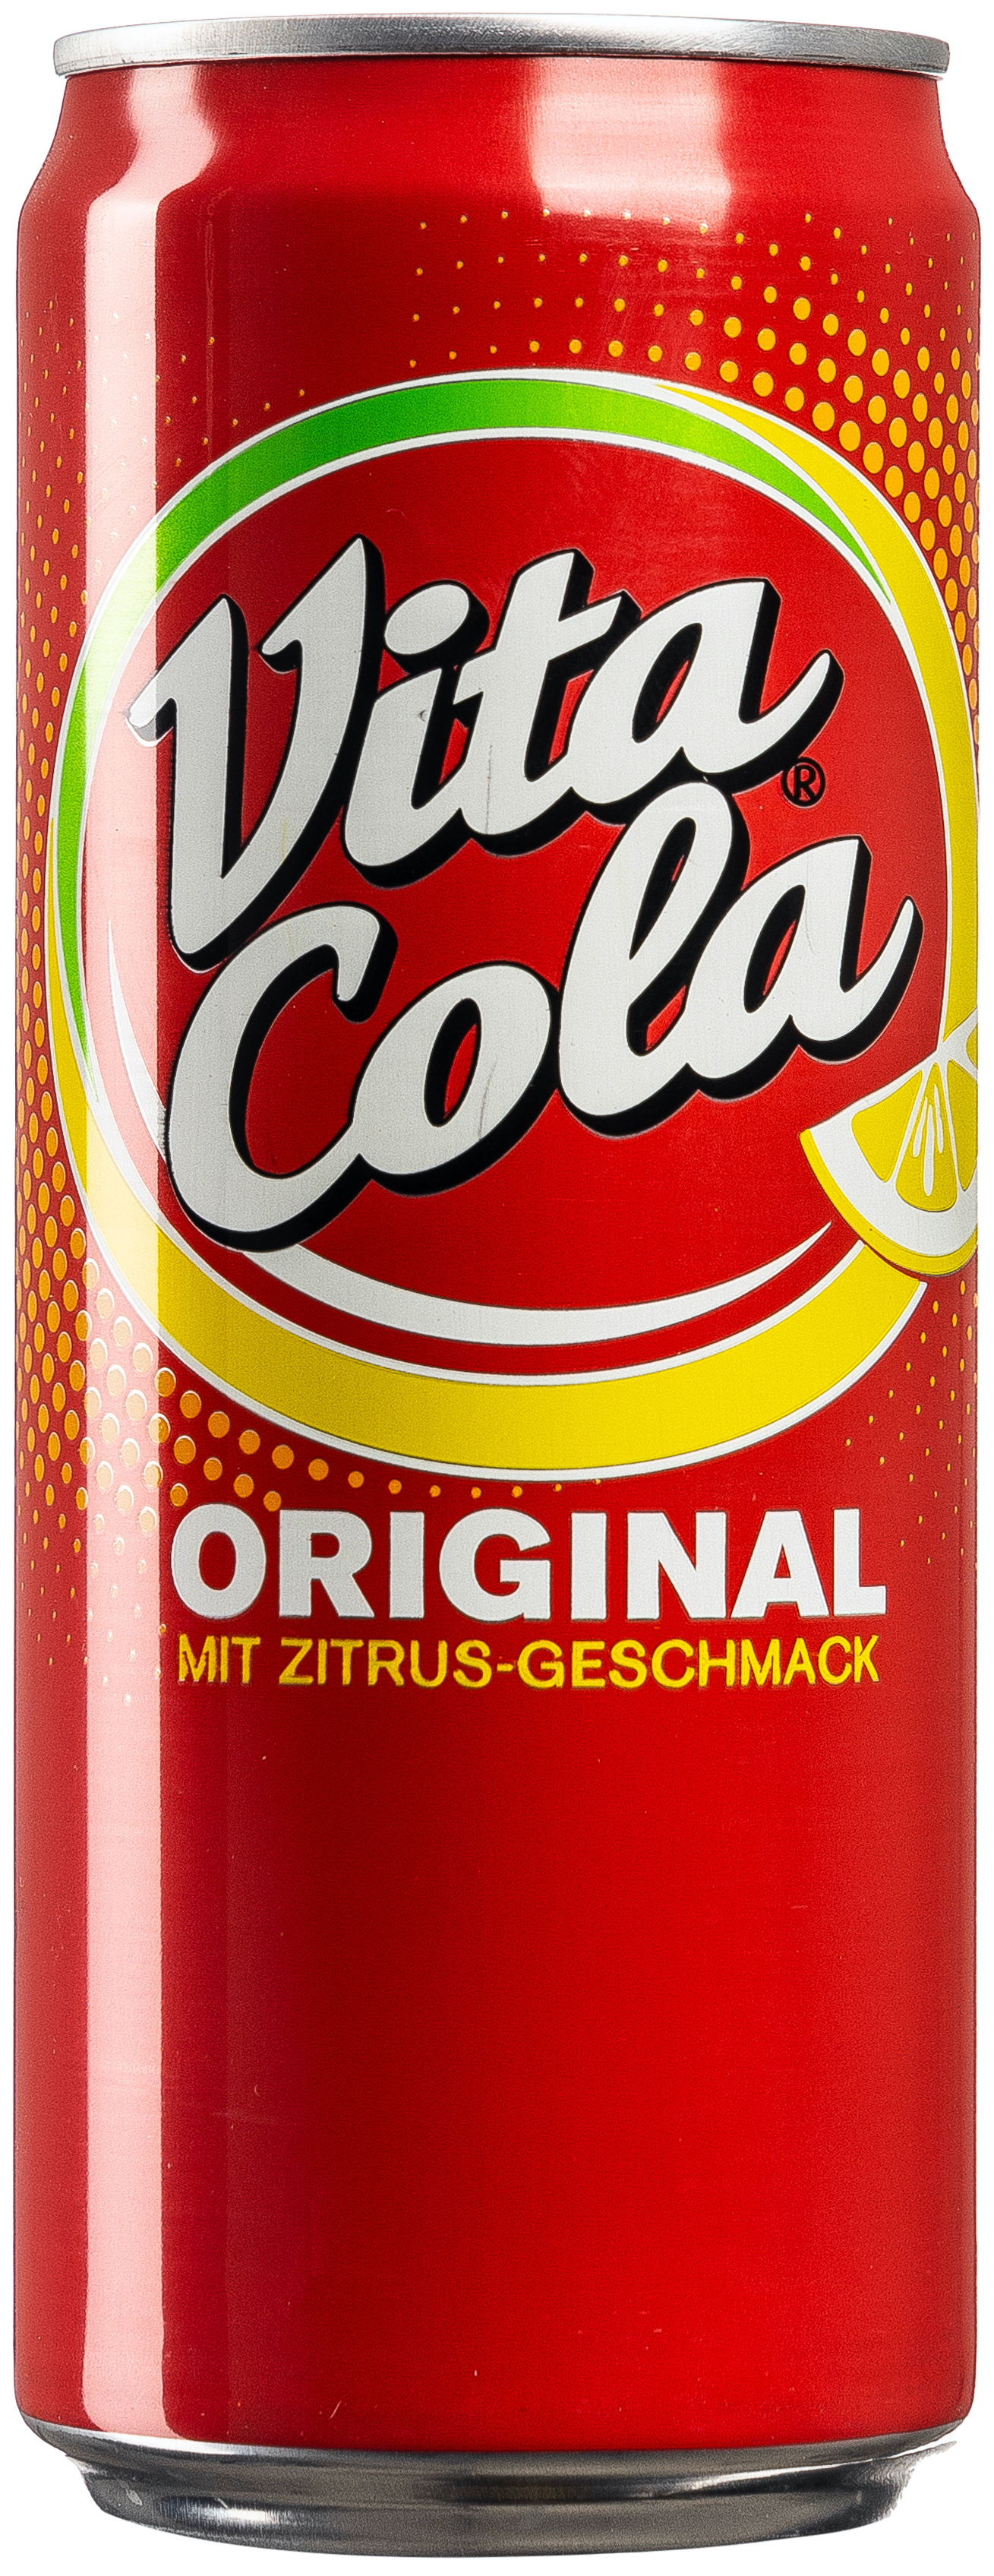 Vita Cola Original 0,33L EINWEG